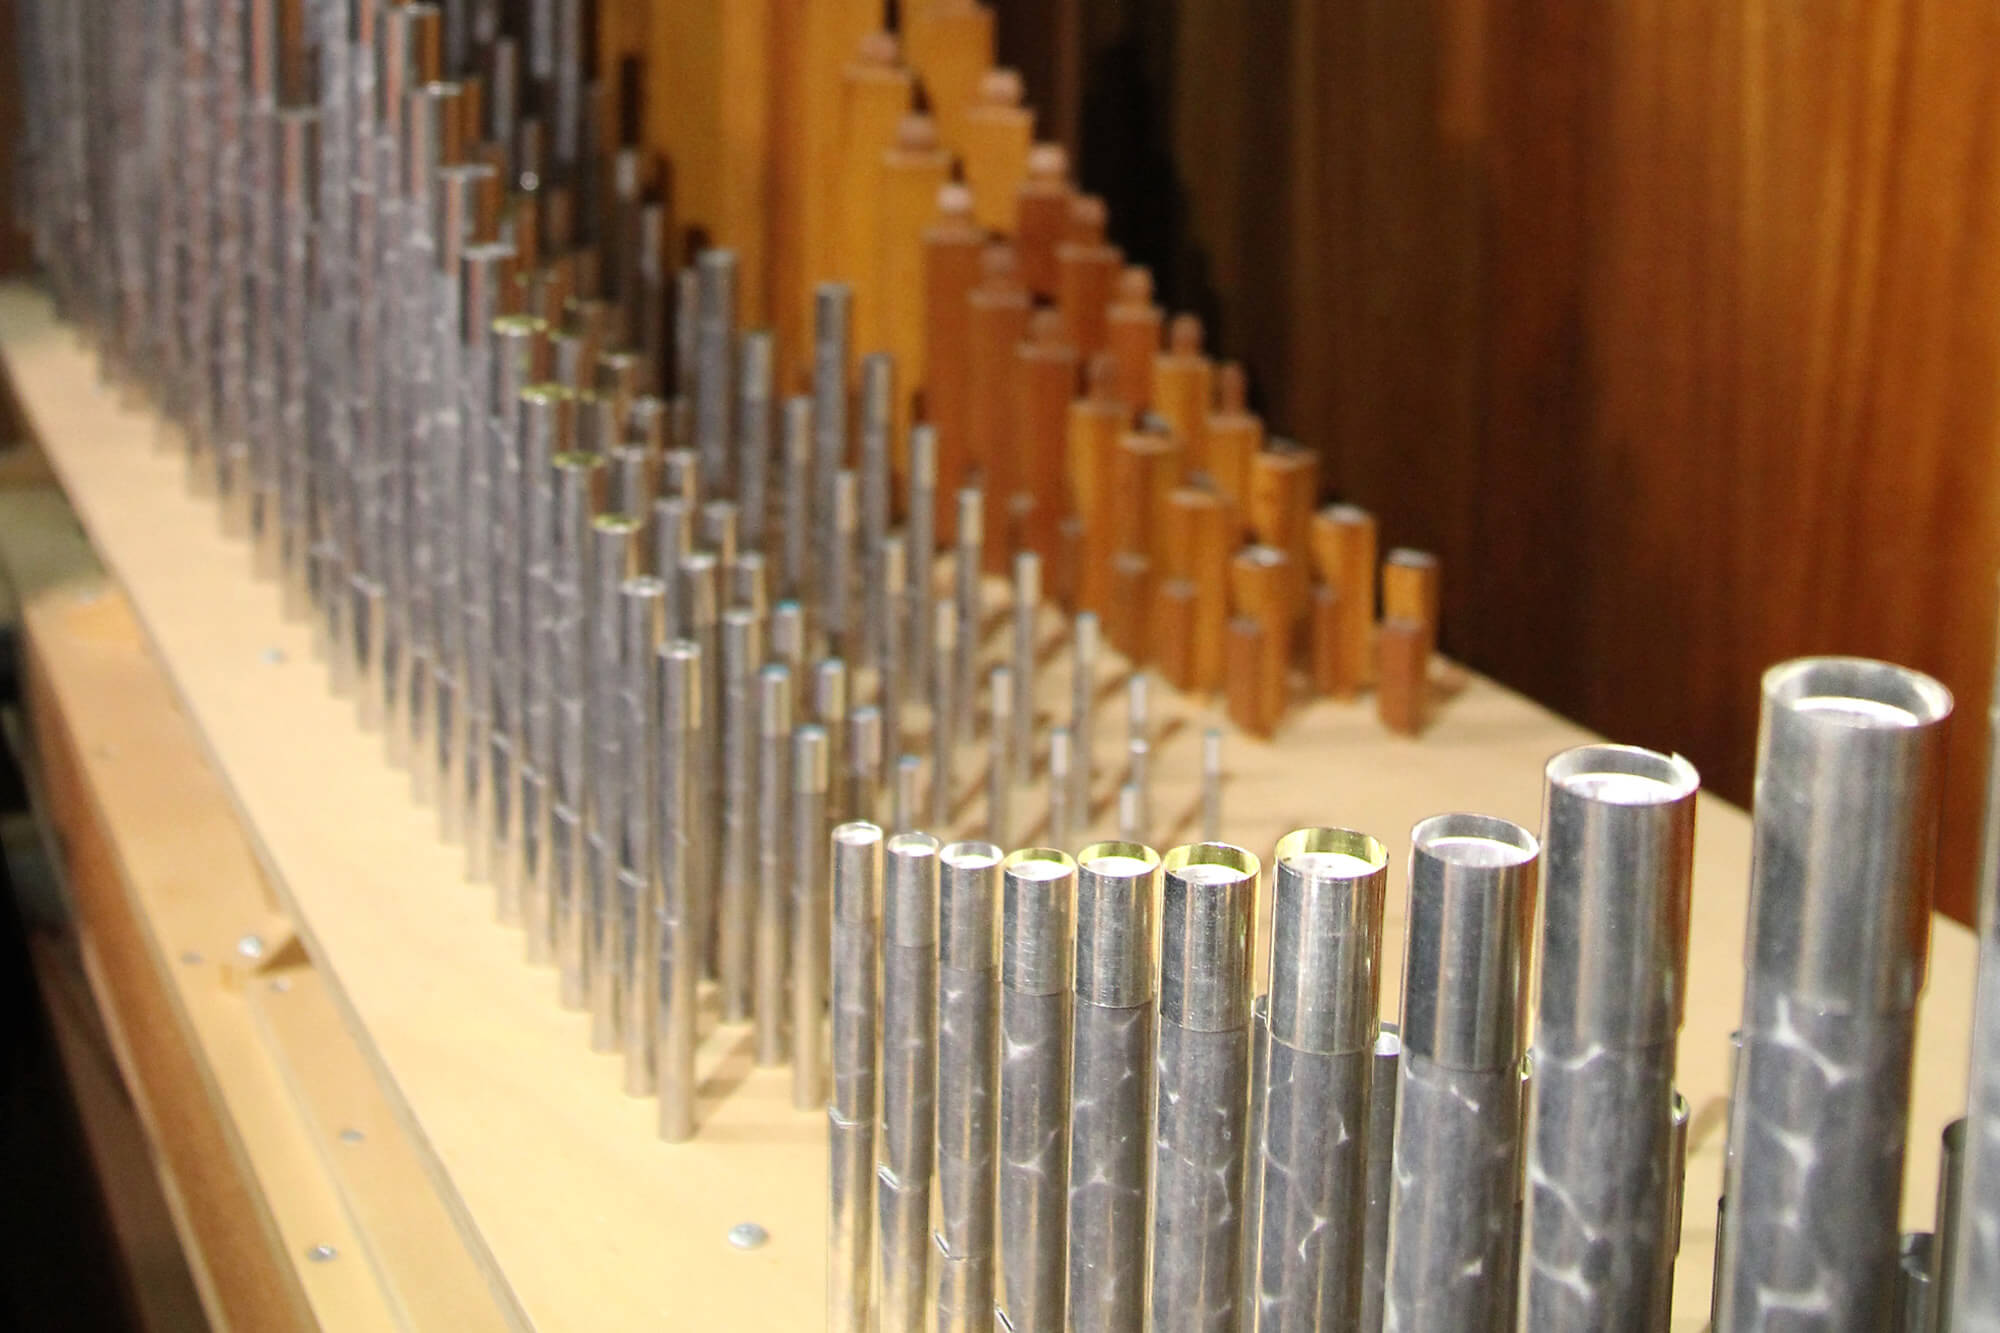 Organ Pipe Makers - Organ Pipe Making - Australian Pipe Organs (APO)